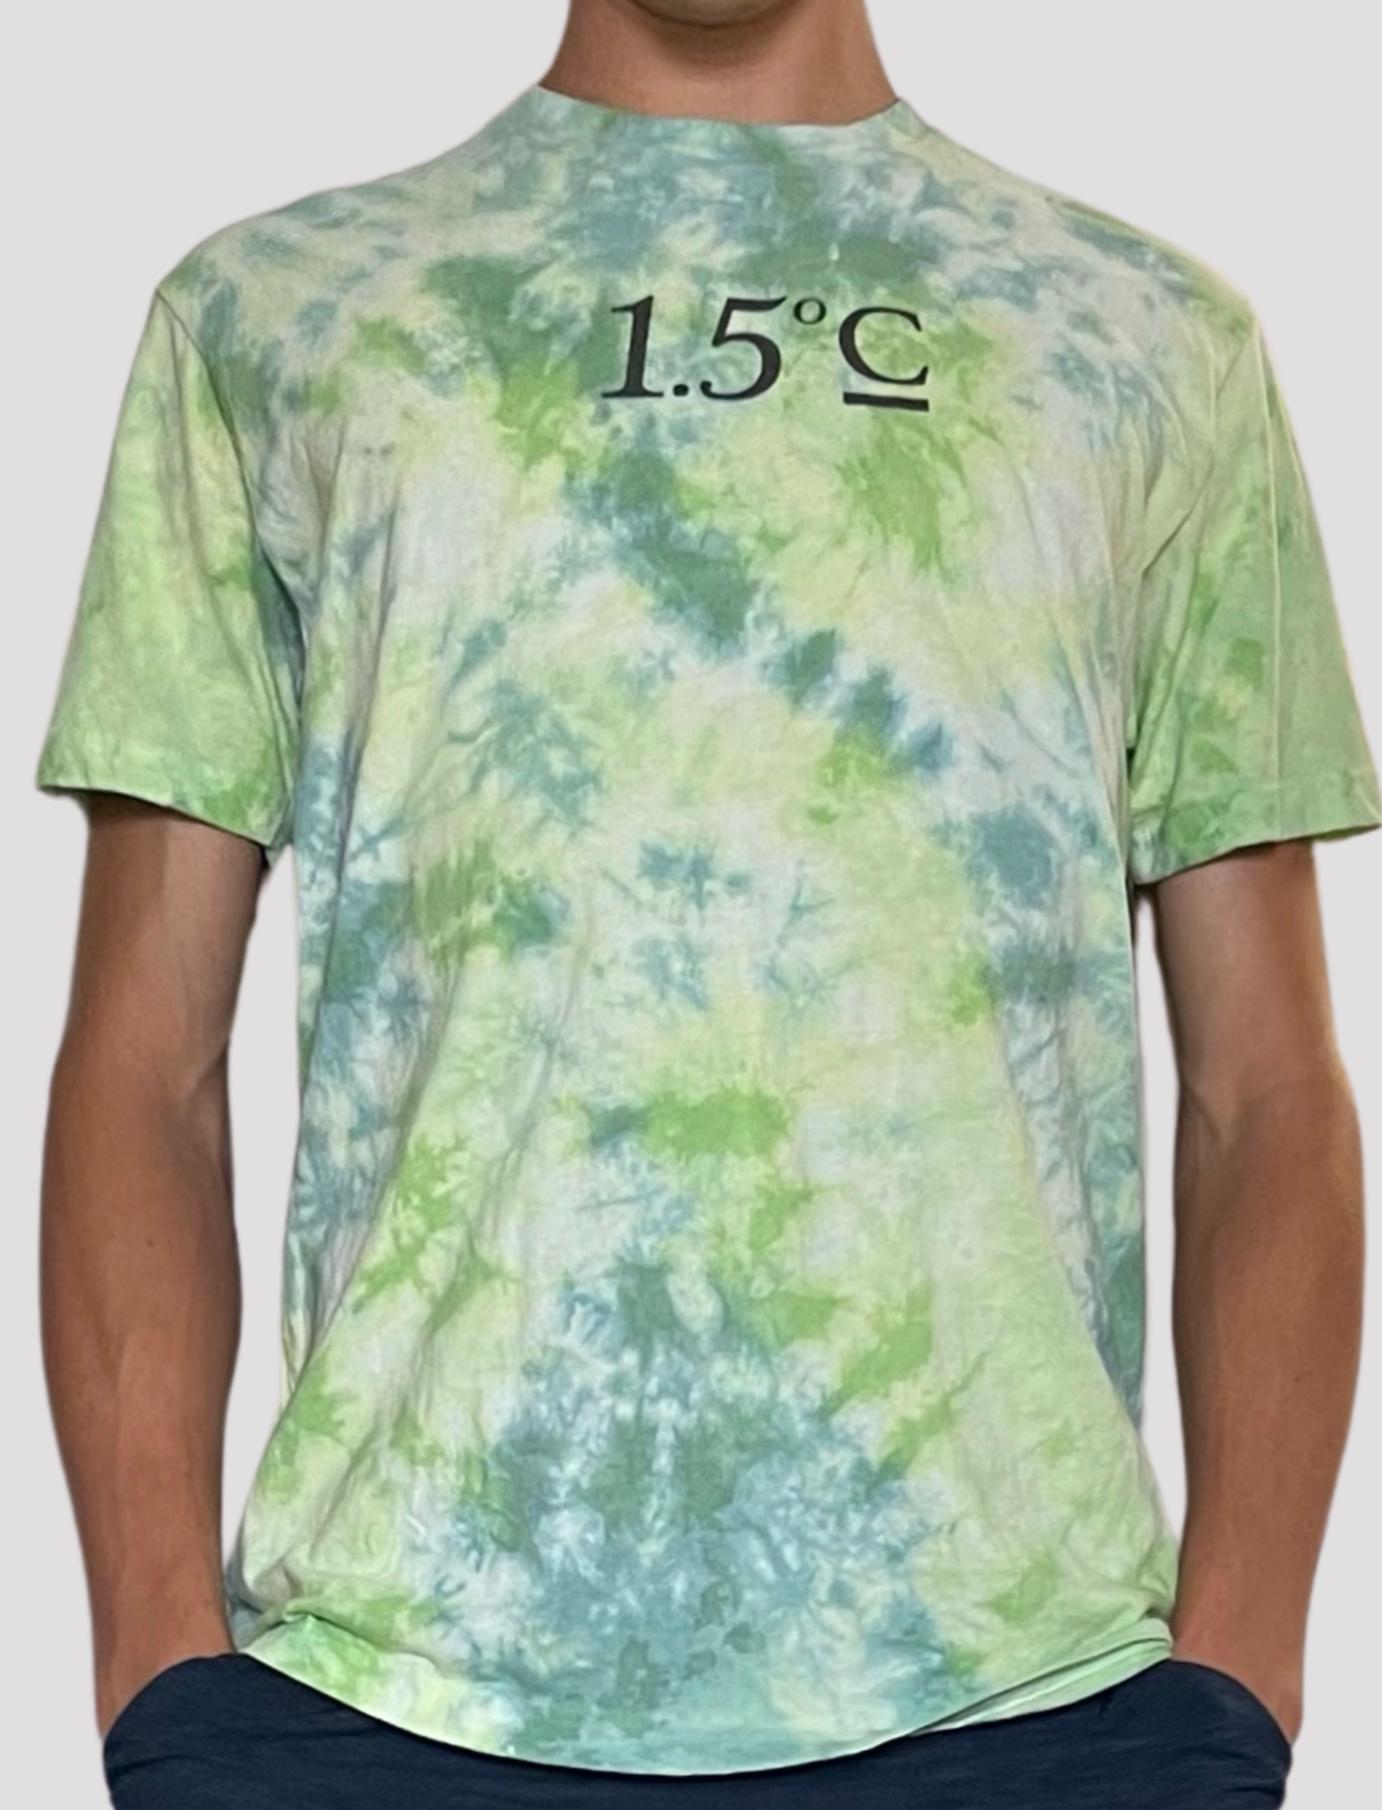 1.5ºC Earth Focus Eco-Spirit Hand Tie-Dyed Unisex Unisex Tshirt_Involvd Social Advocacy Clothing Brand